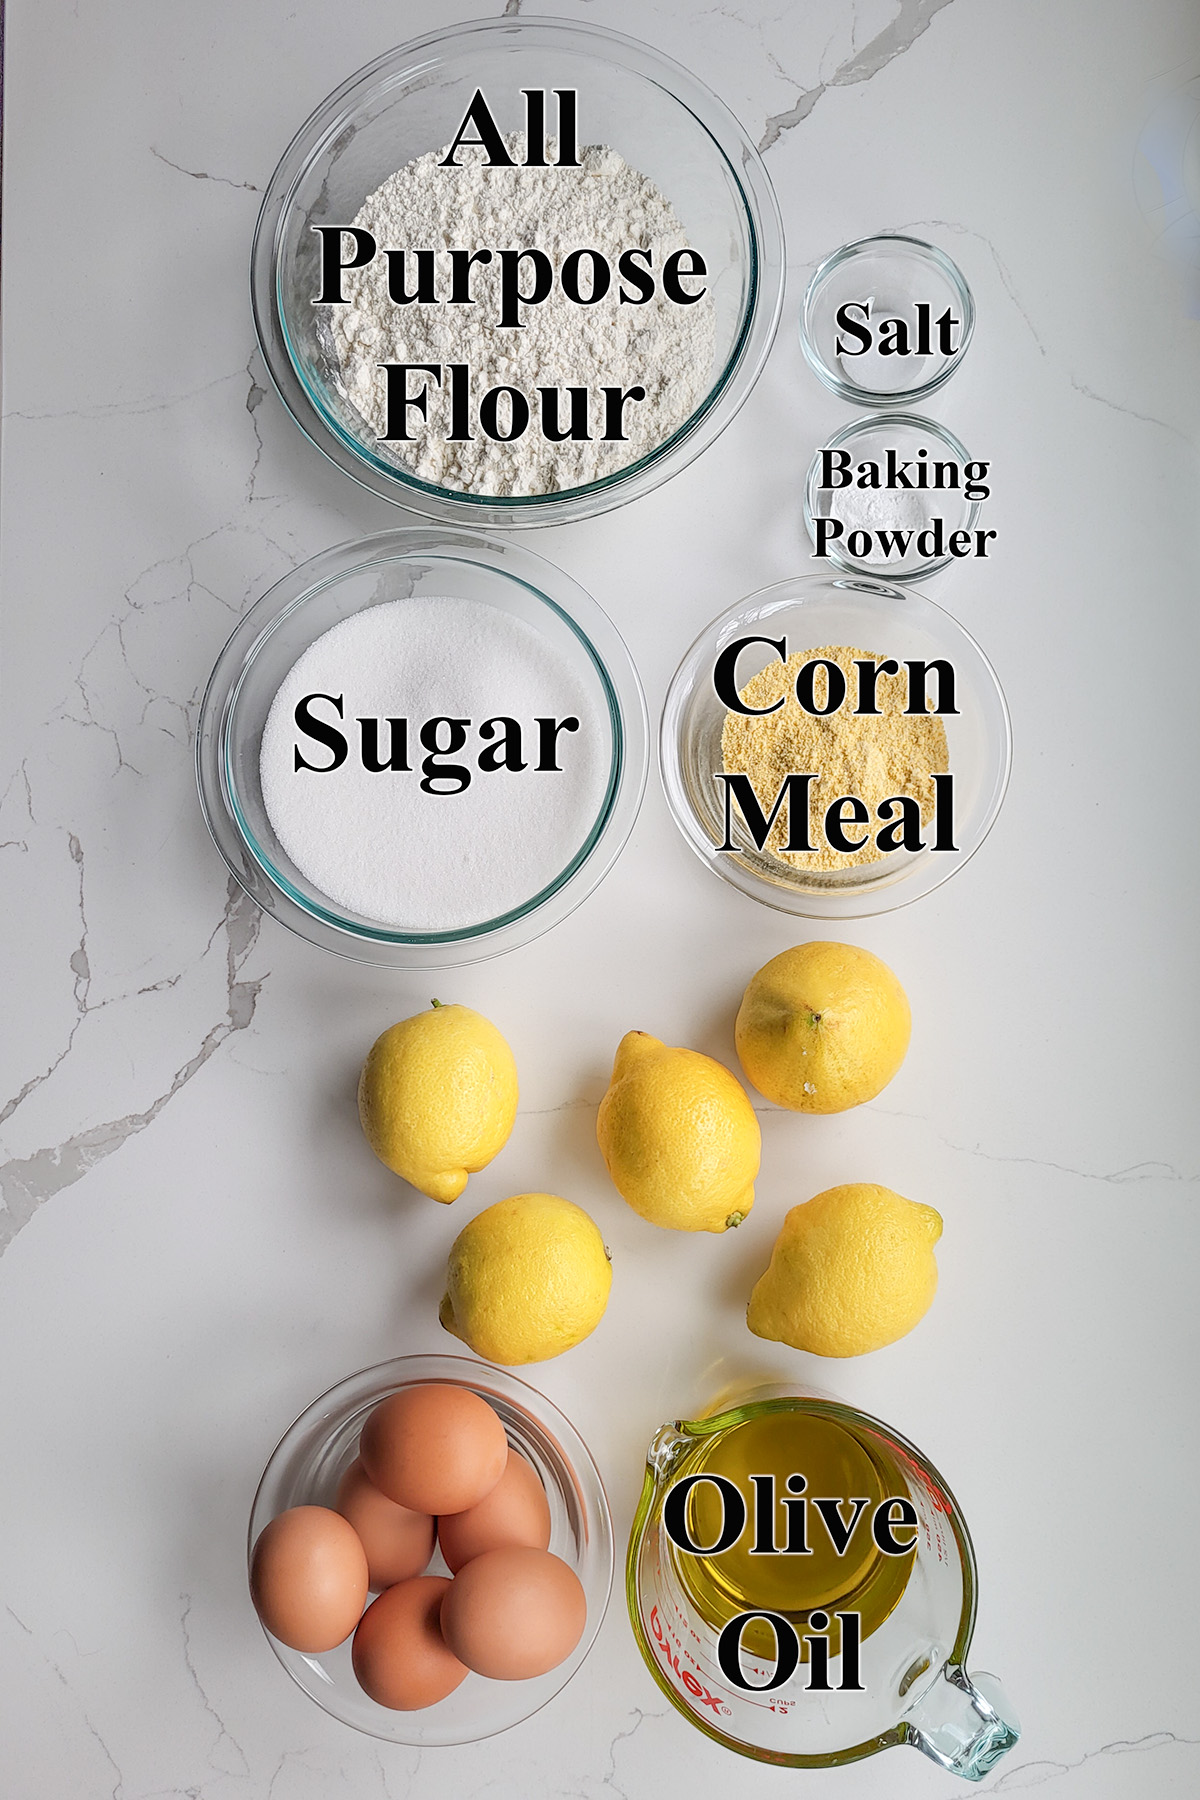 ingredients for lemon olive oil cake in glass bowls.